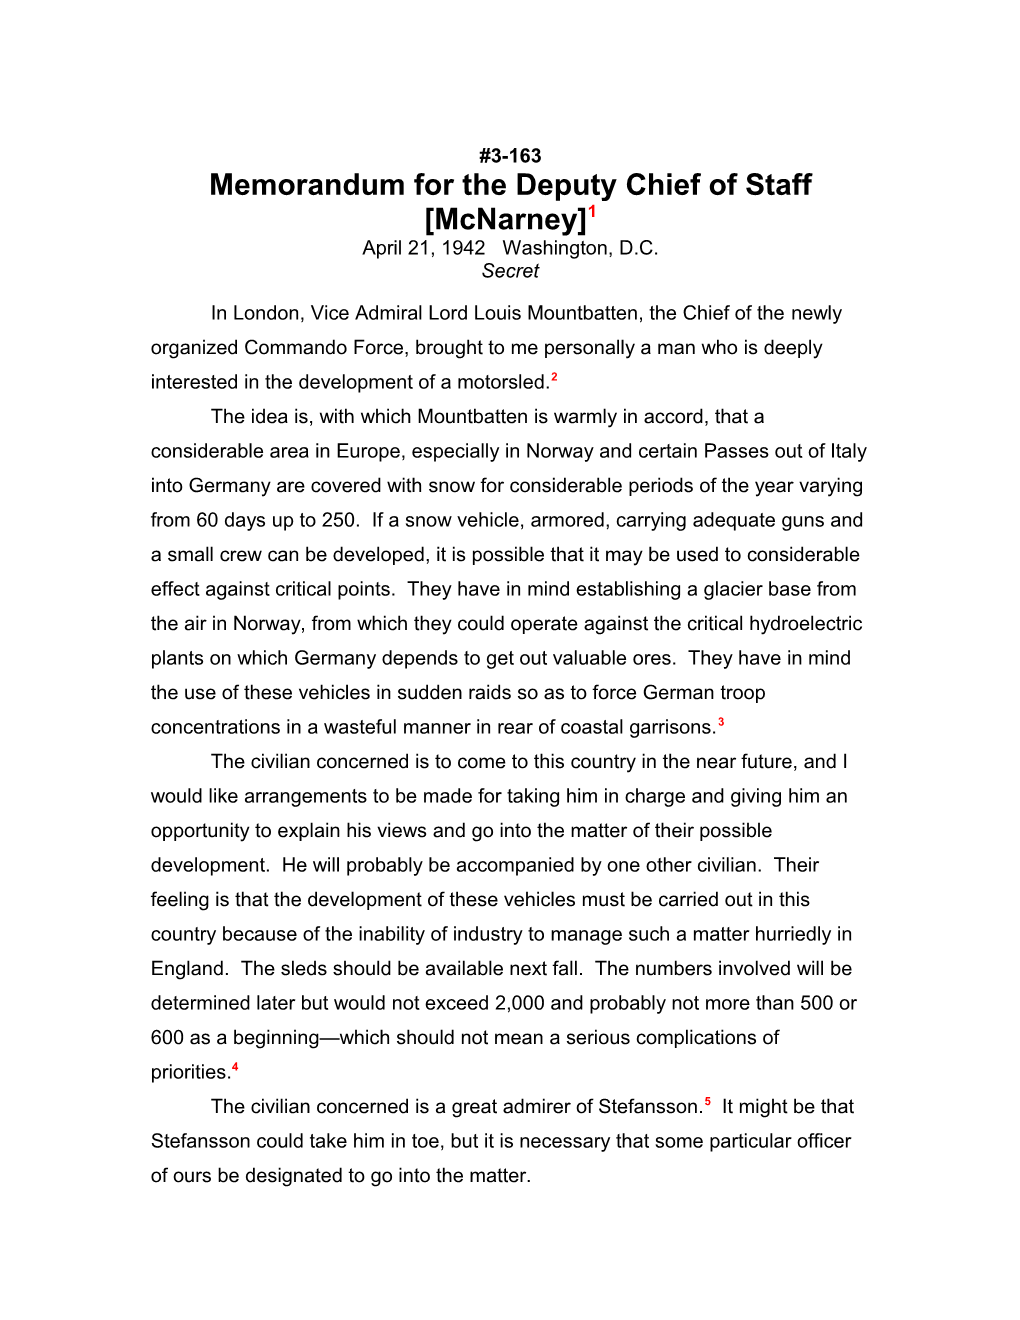 Memorandum for the Deputy Chief of Staff Mcnarney 1